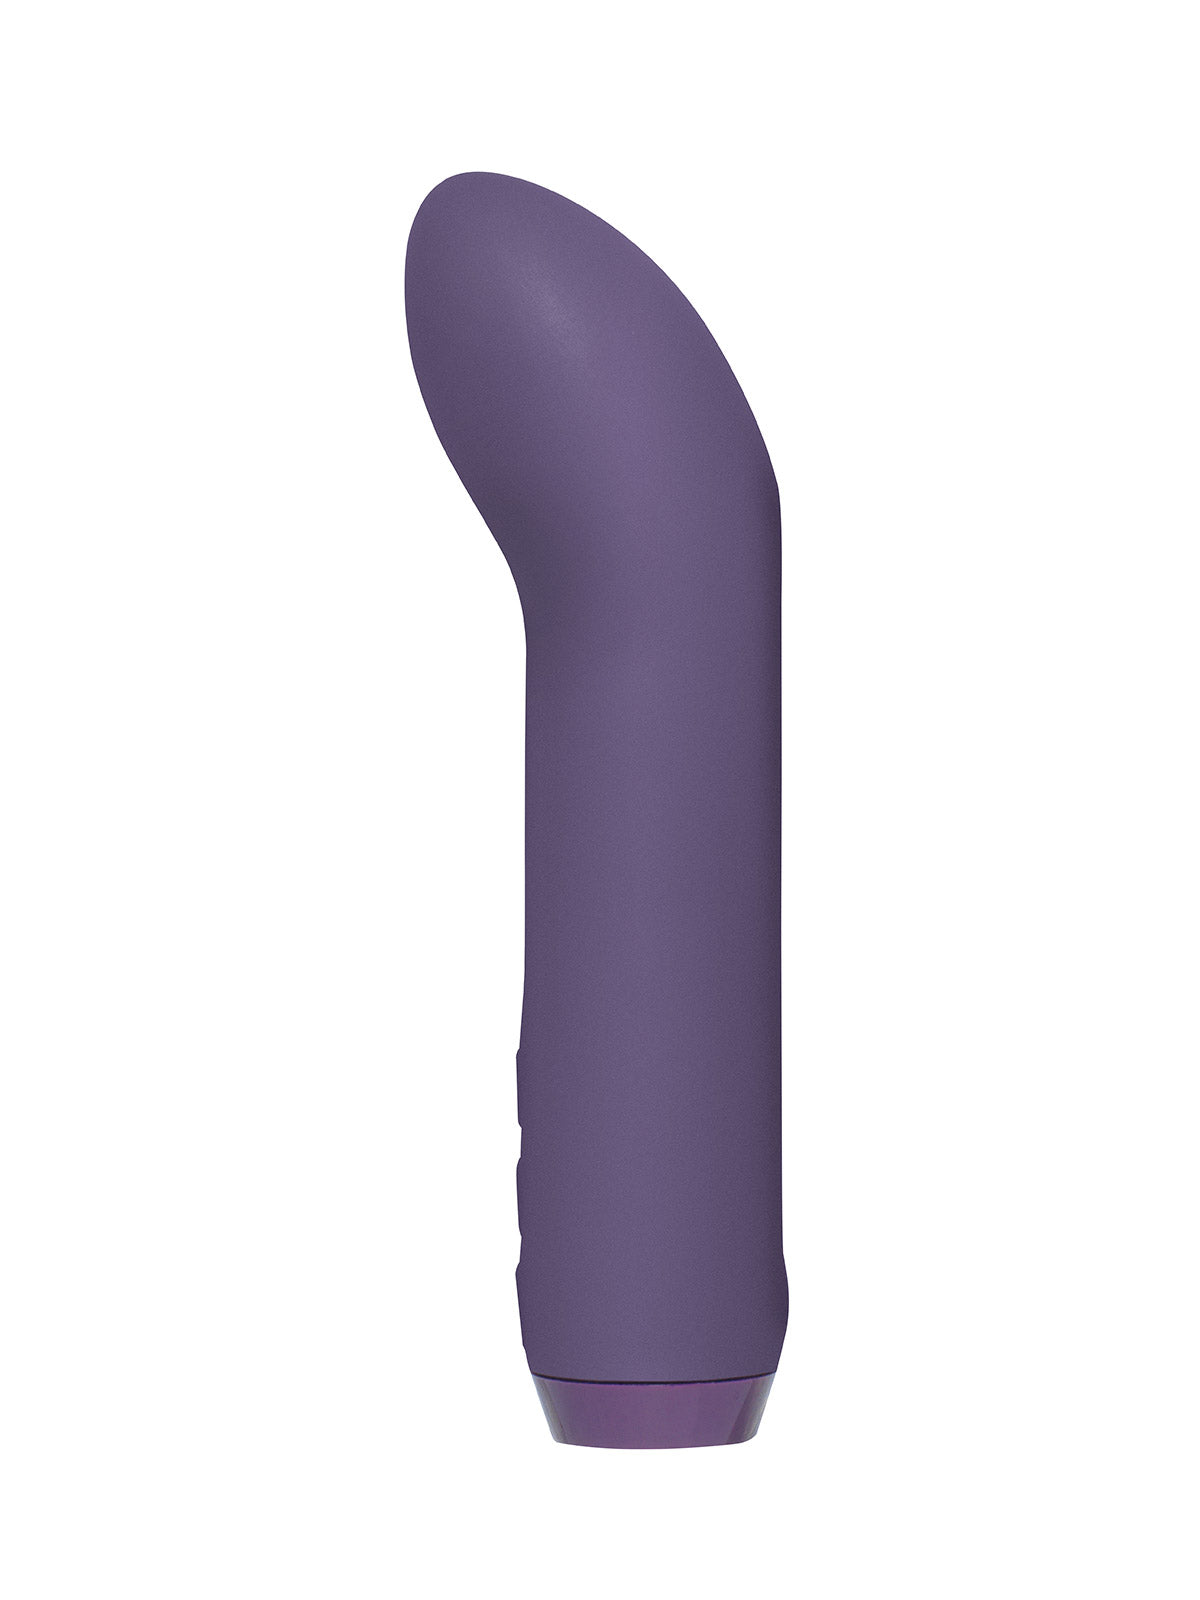 Purple Mini G-Spot Bullet Vibrator by JeJoue